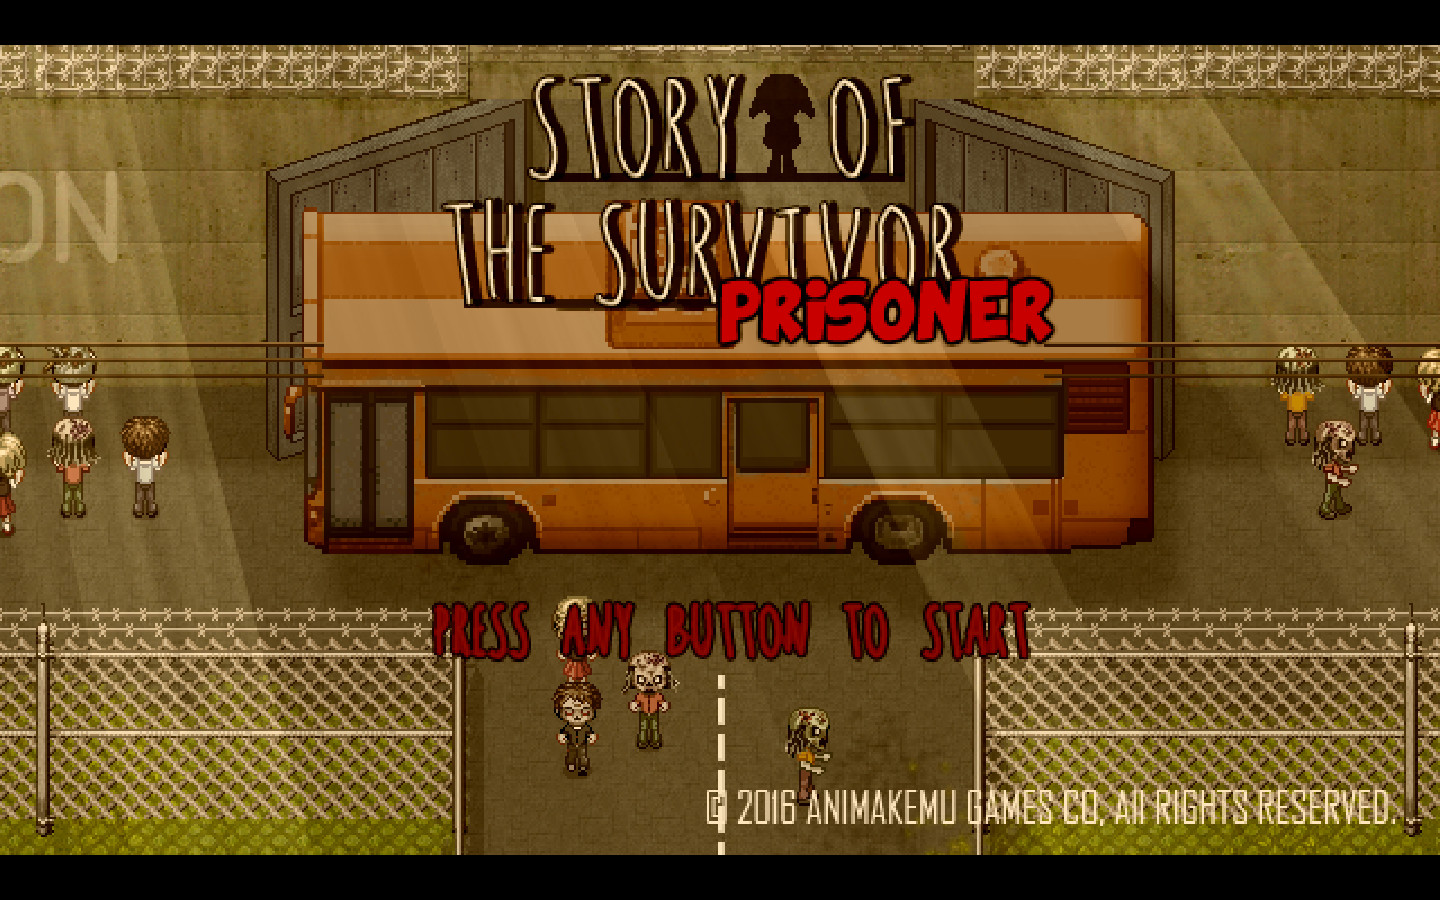 Story of the Survivor: Prisoner Steam CD Key, 0.55 usd